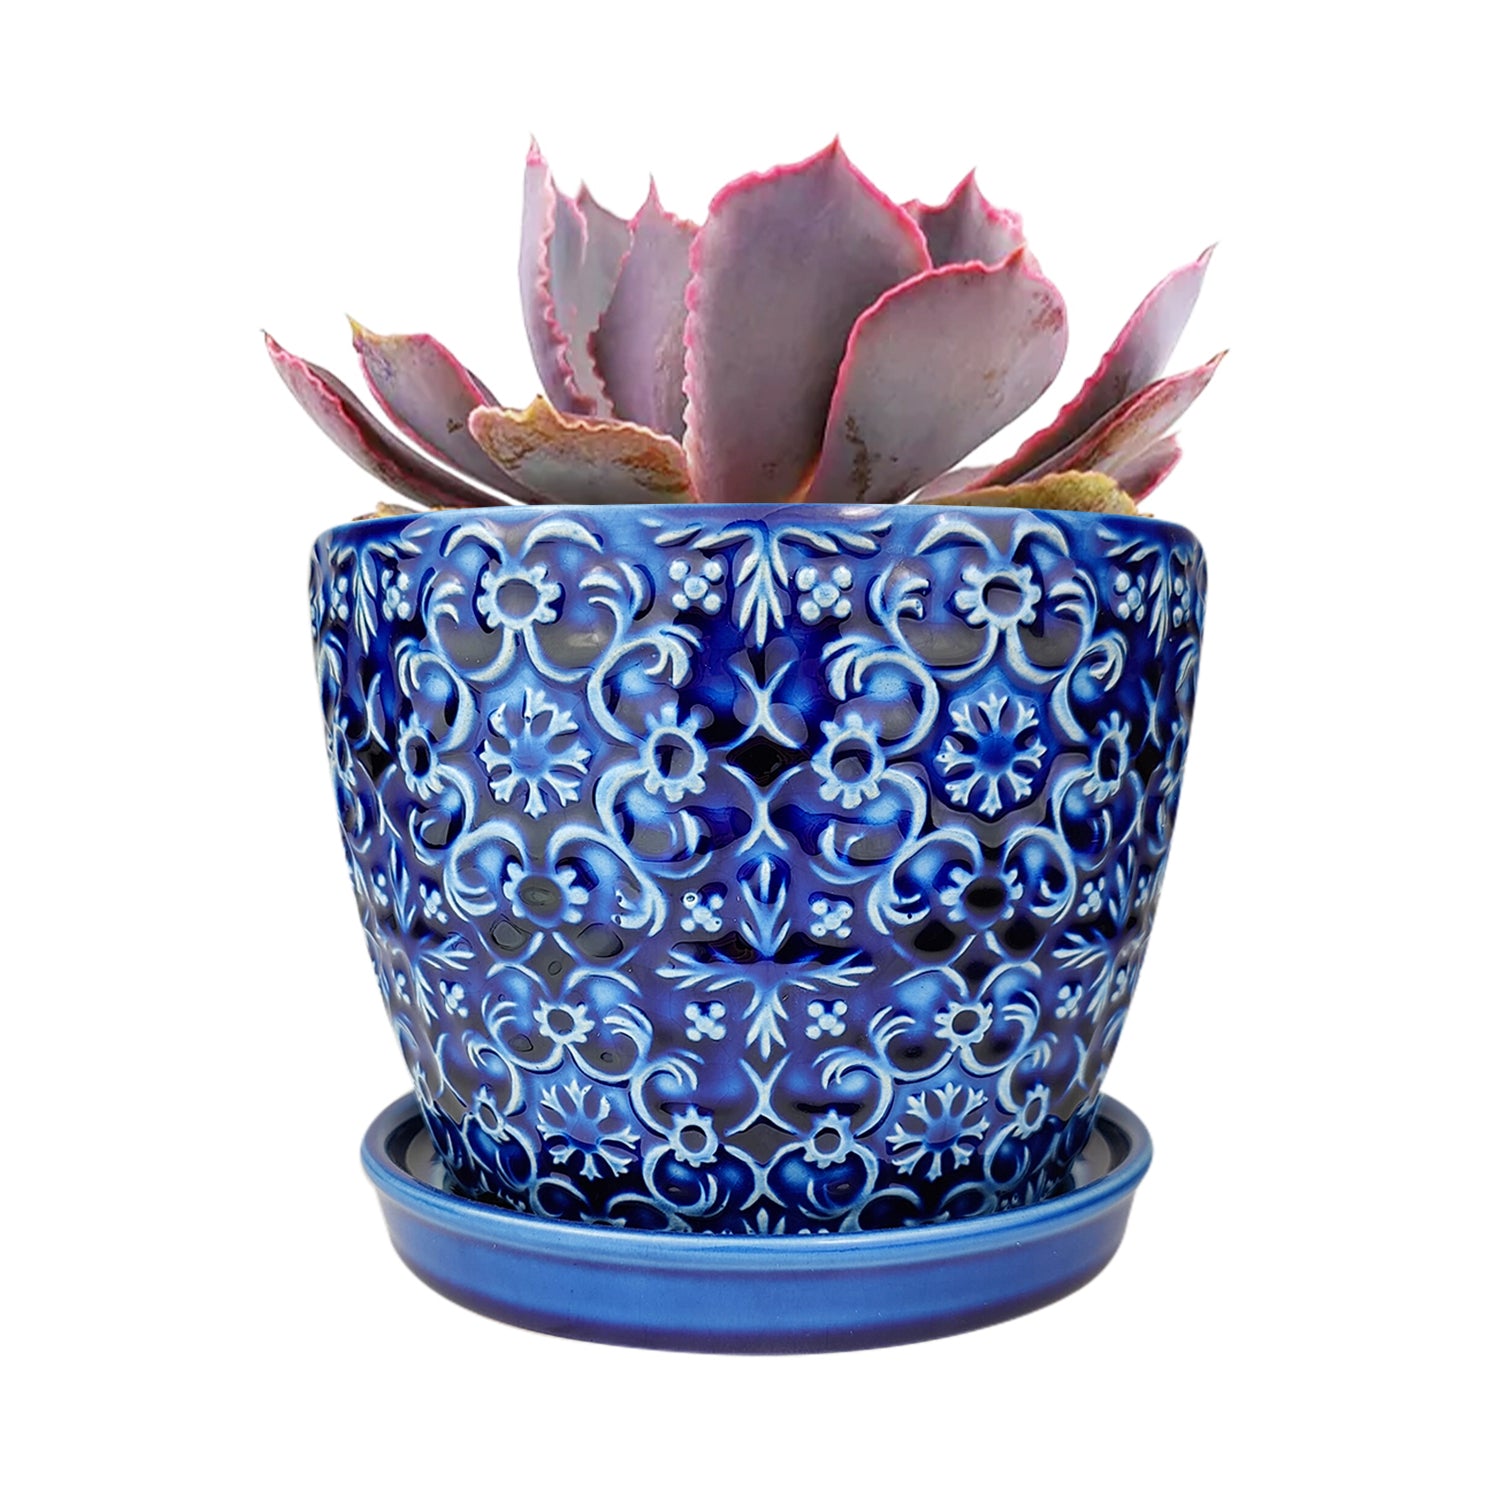 6 inch Blue Ceramic Mediterranean Bell Pot